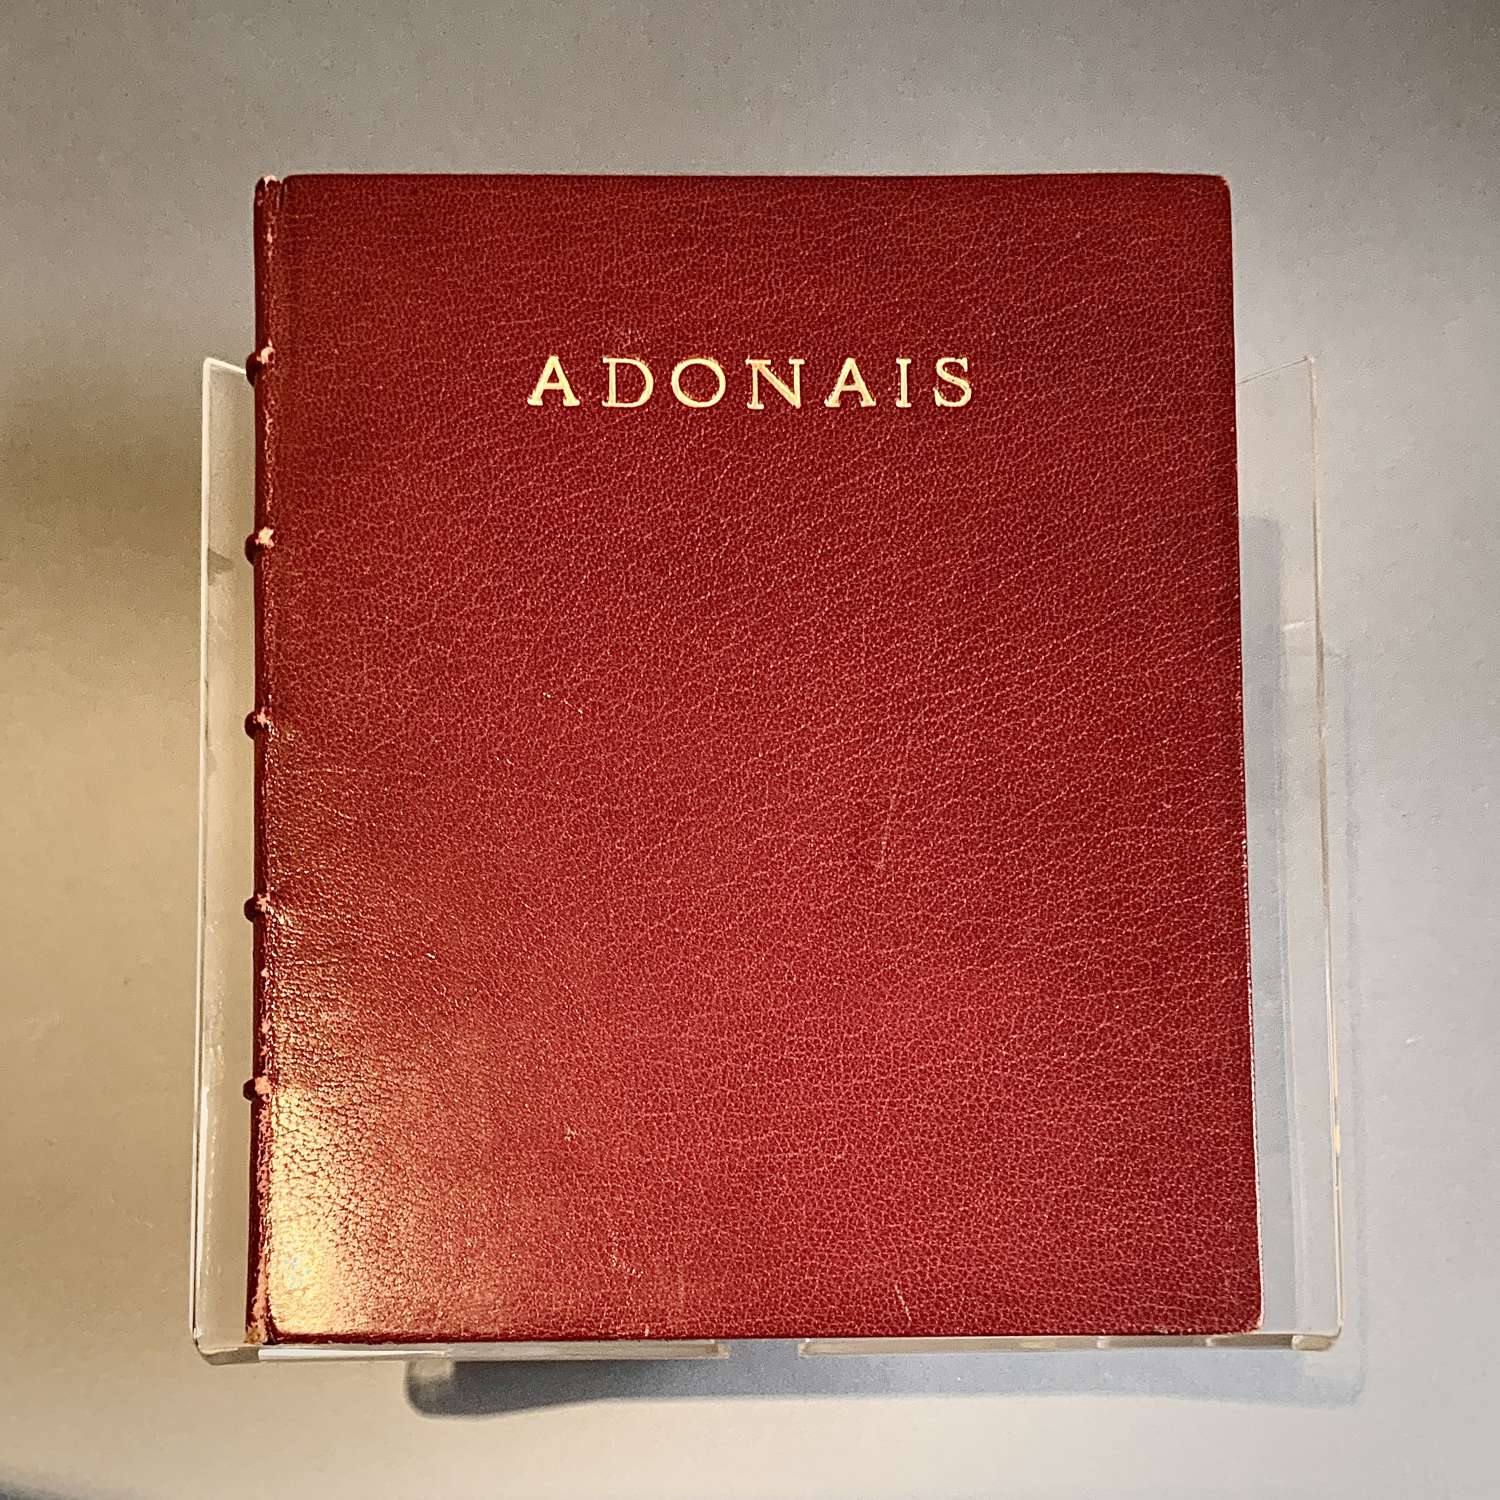 Rare printing of Percy Bysshe Shelley “Adonais” tribute to John Keats